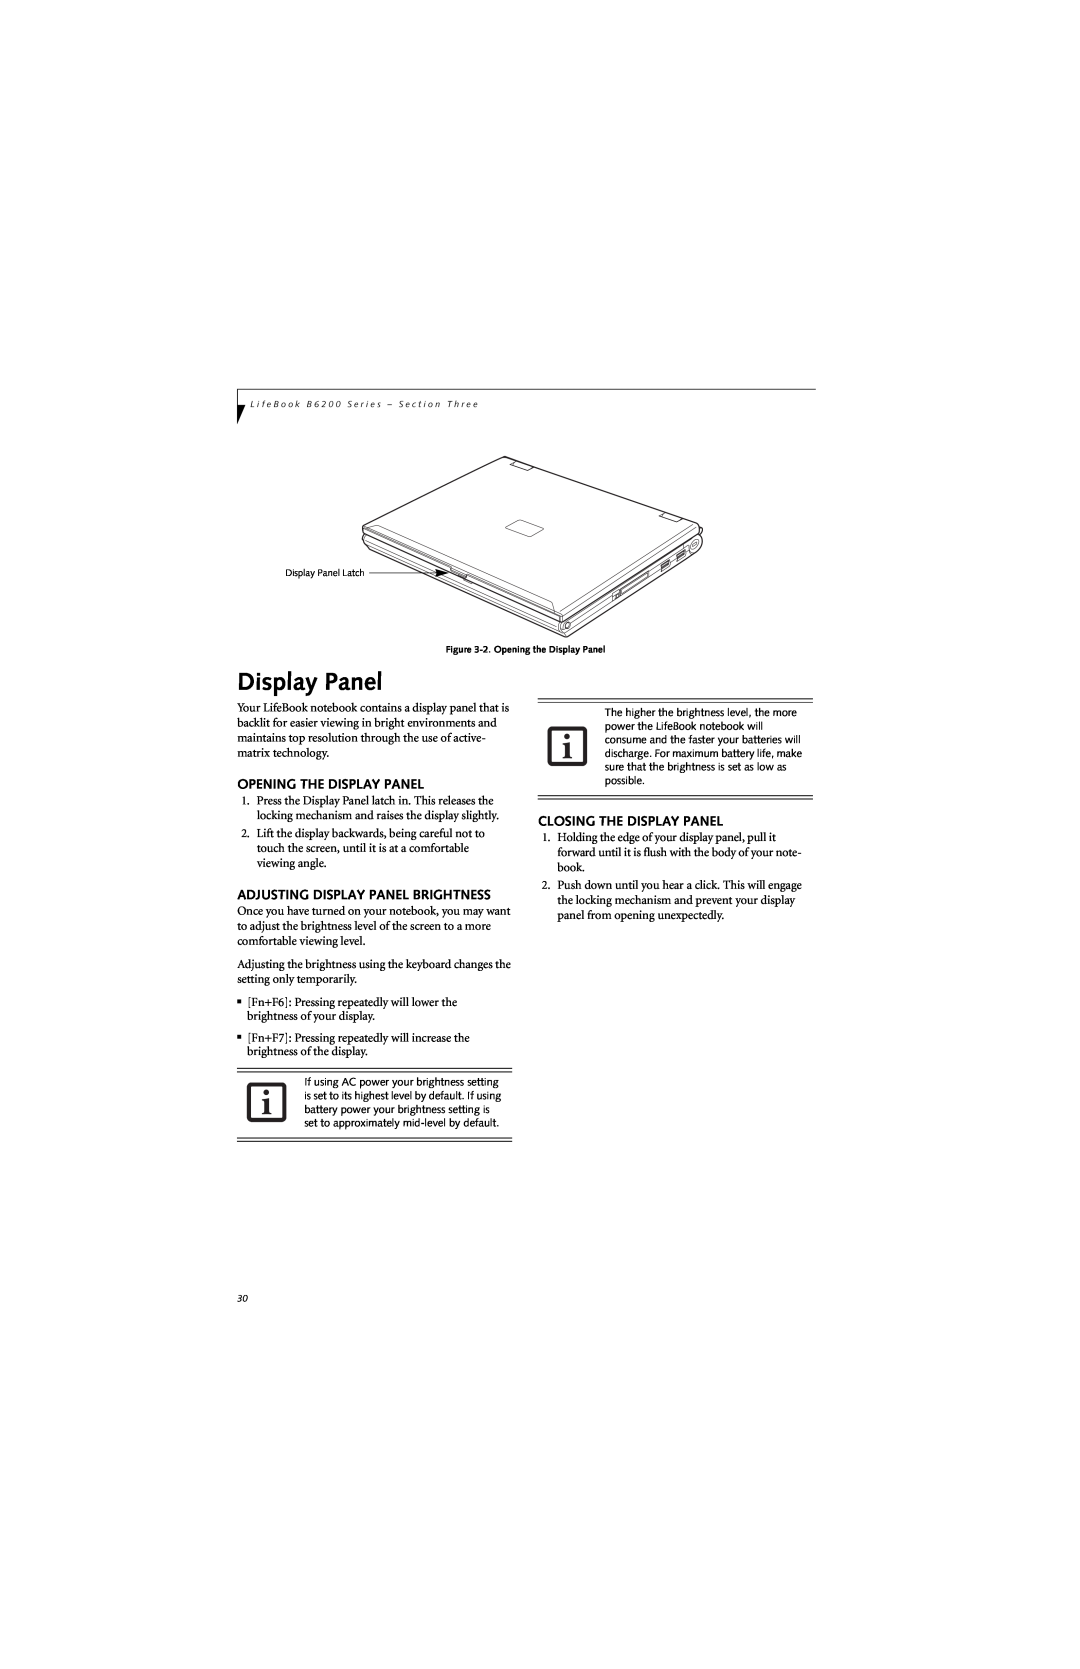 Fujitsu B6220 manual Opening The Display Panel, Adjusting Display Panel Brightness, Closing The Display Panel 